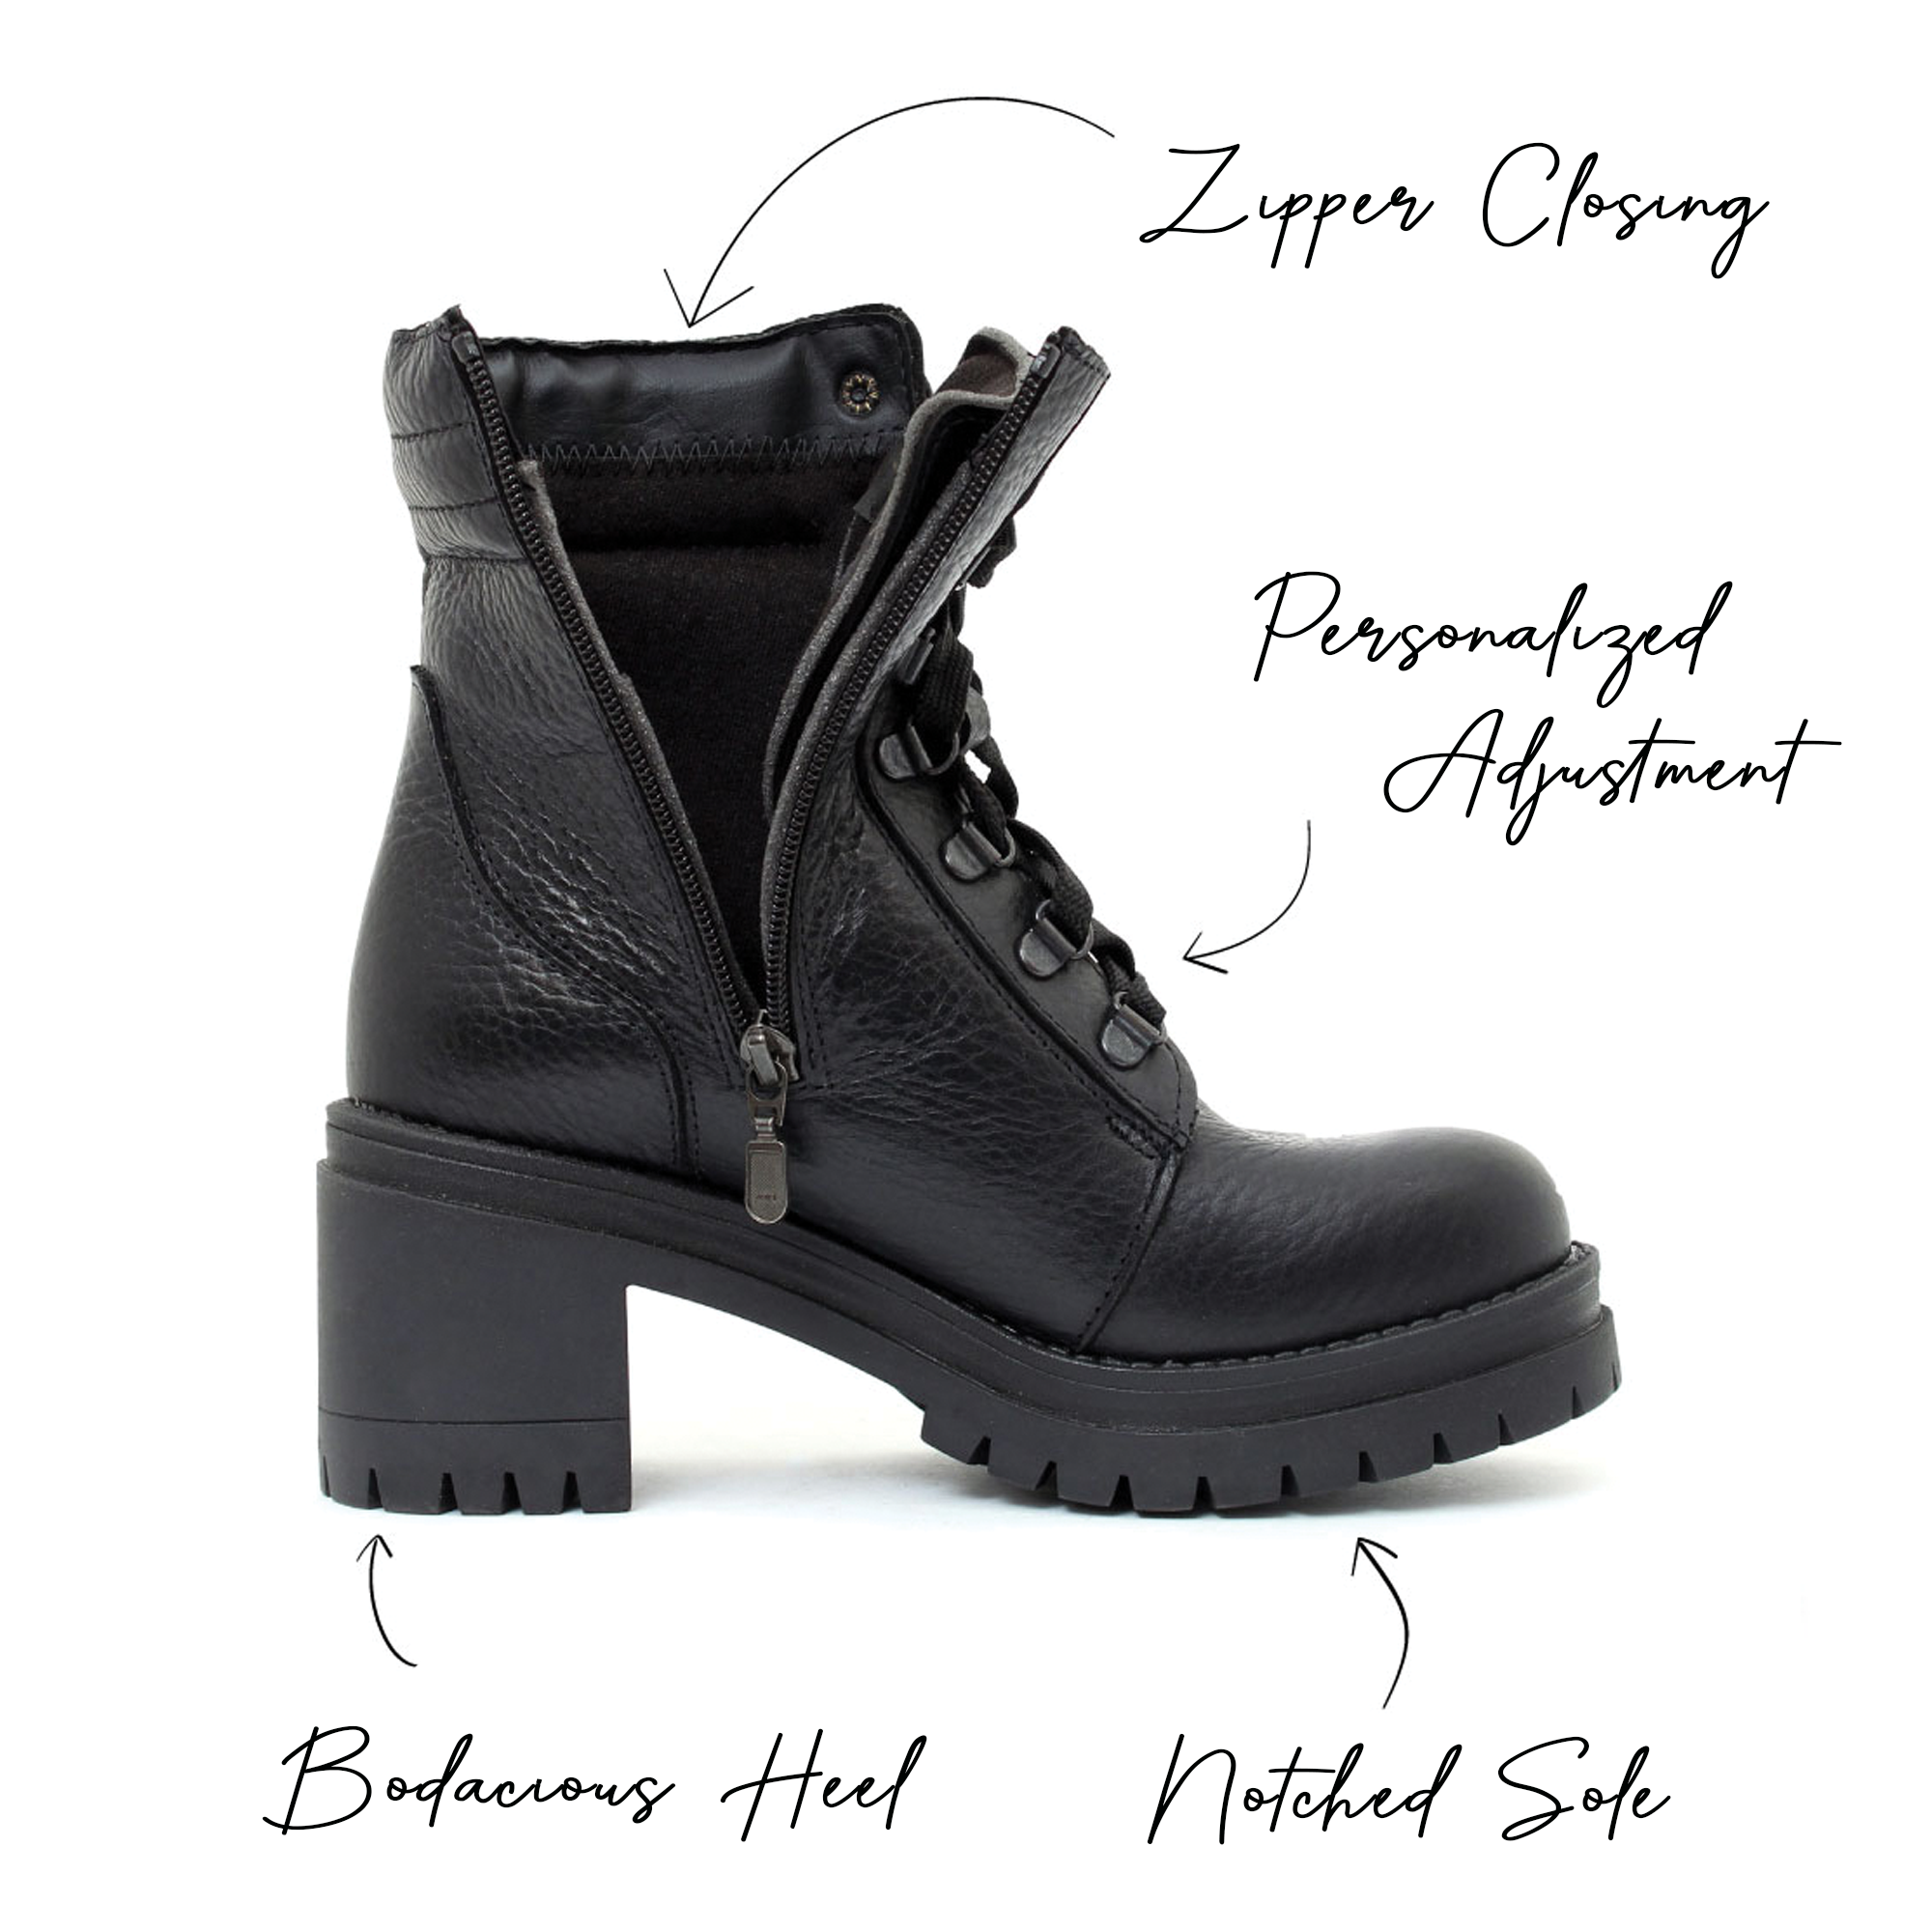 Phoebe 3-season boot for women - Black patent